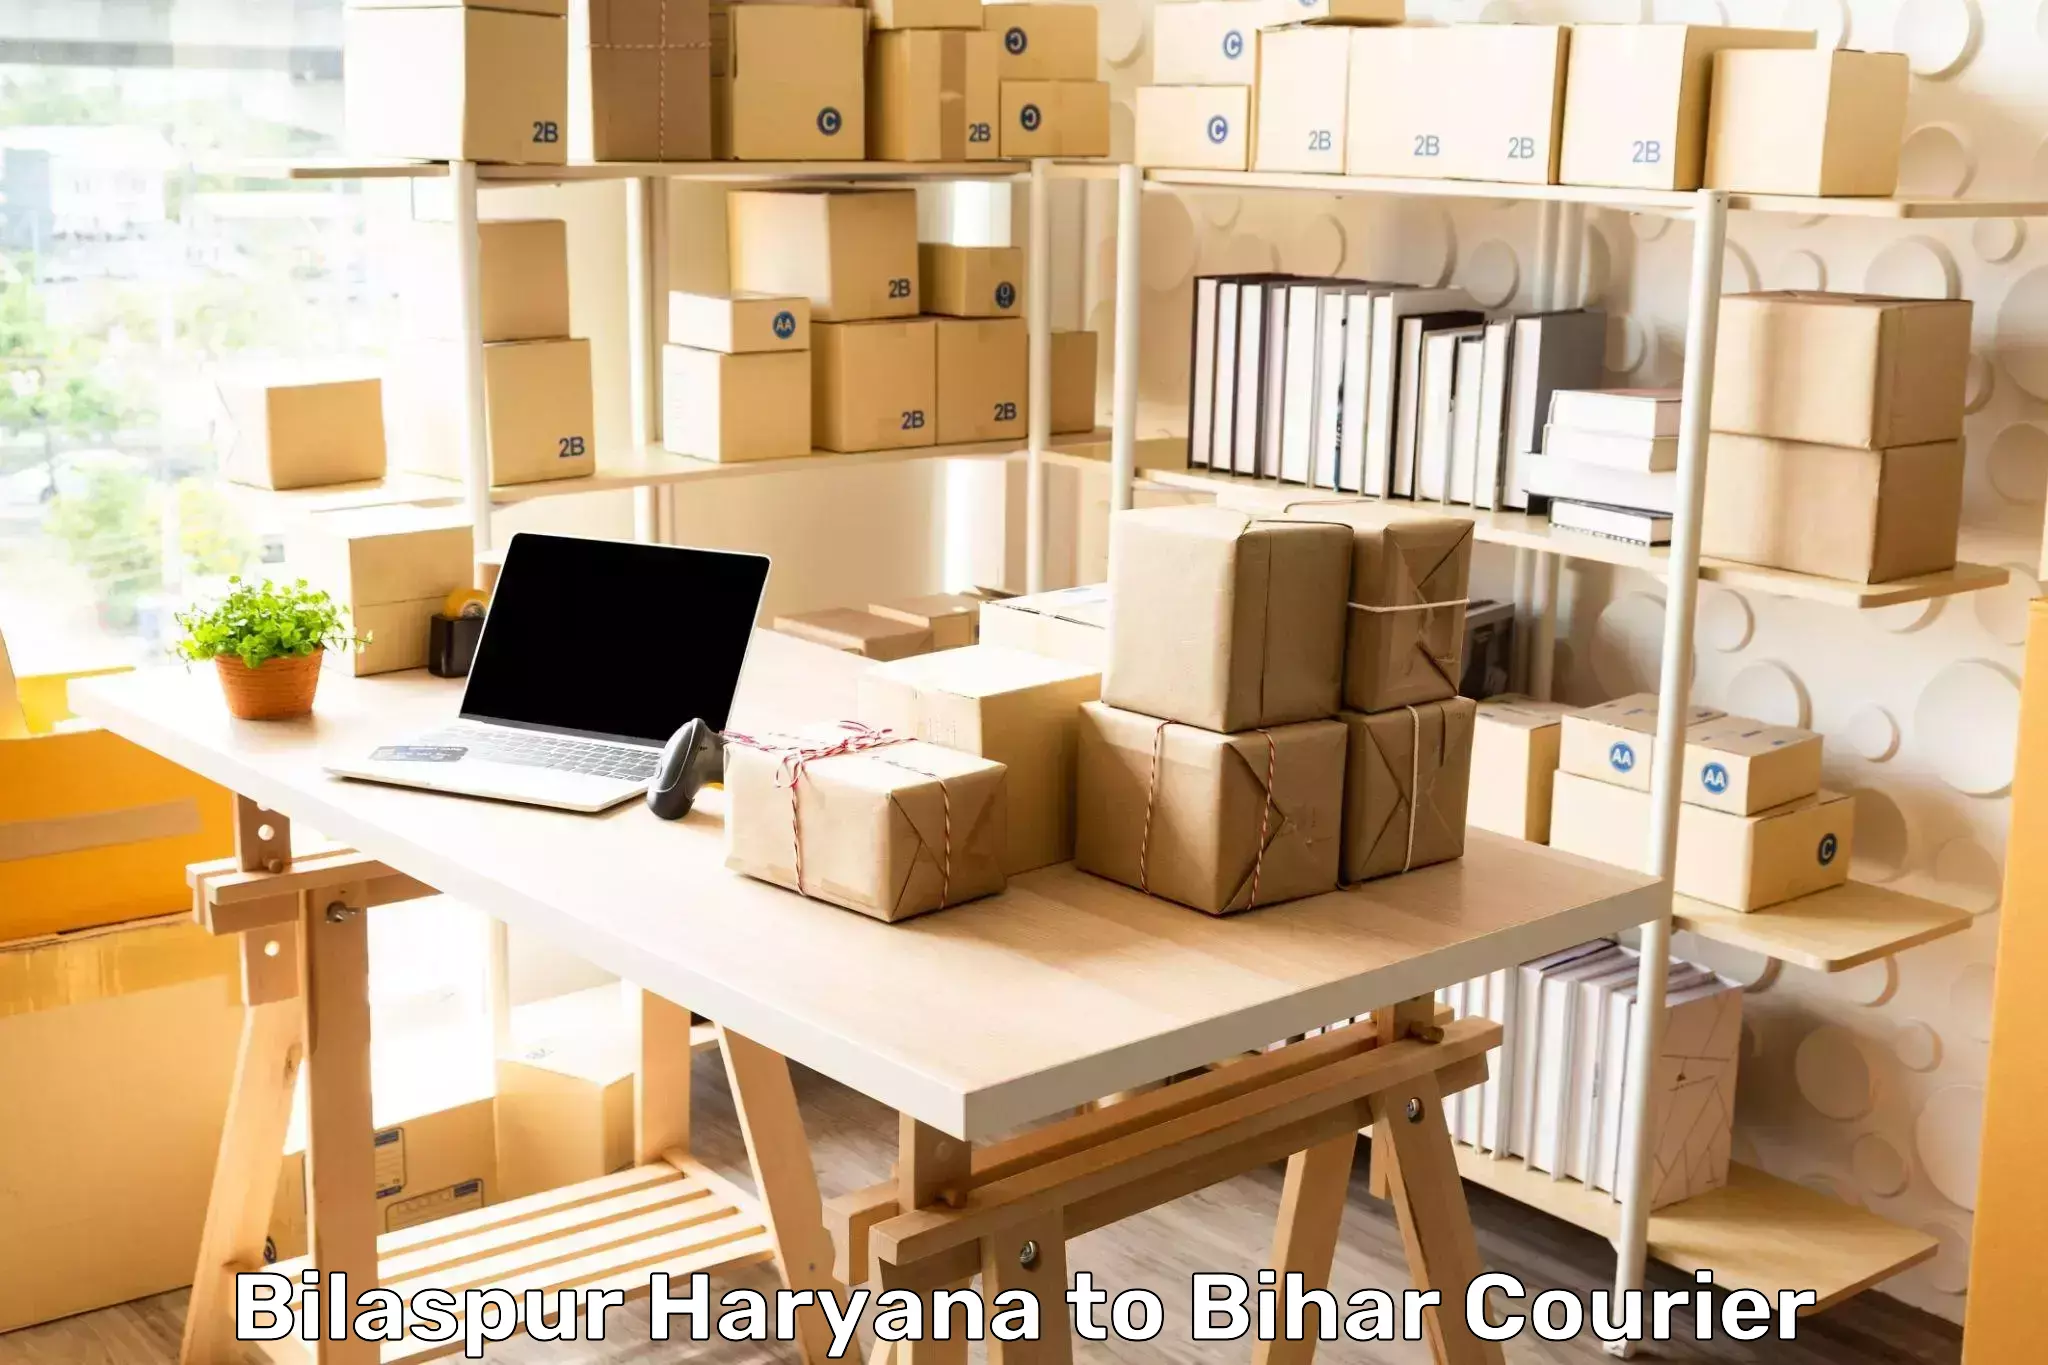 Courier service partnerships Bilaspur Haryana to Biraul